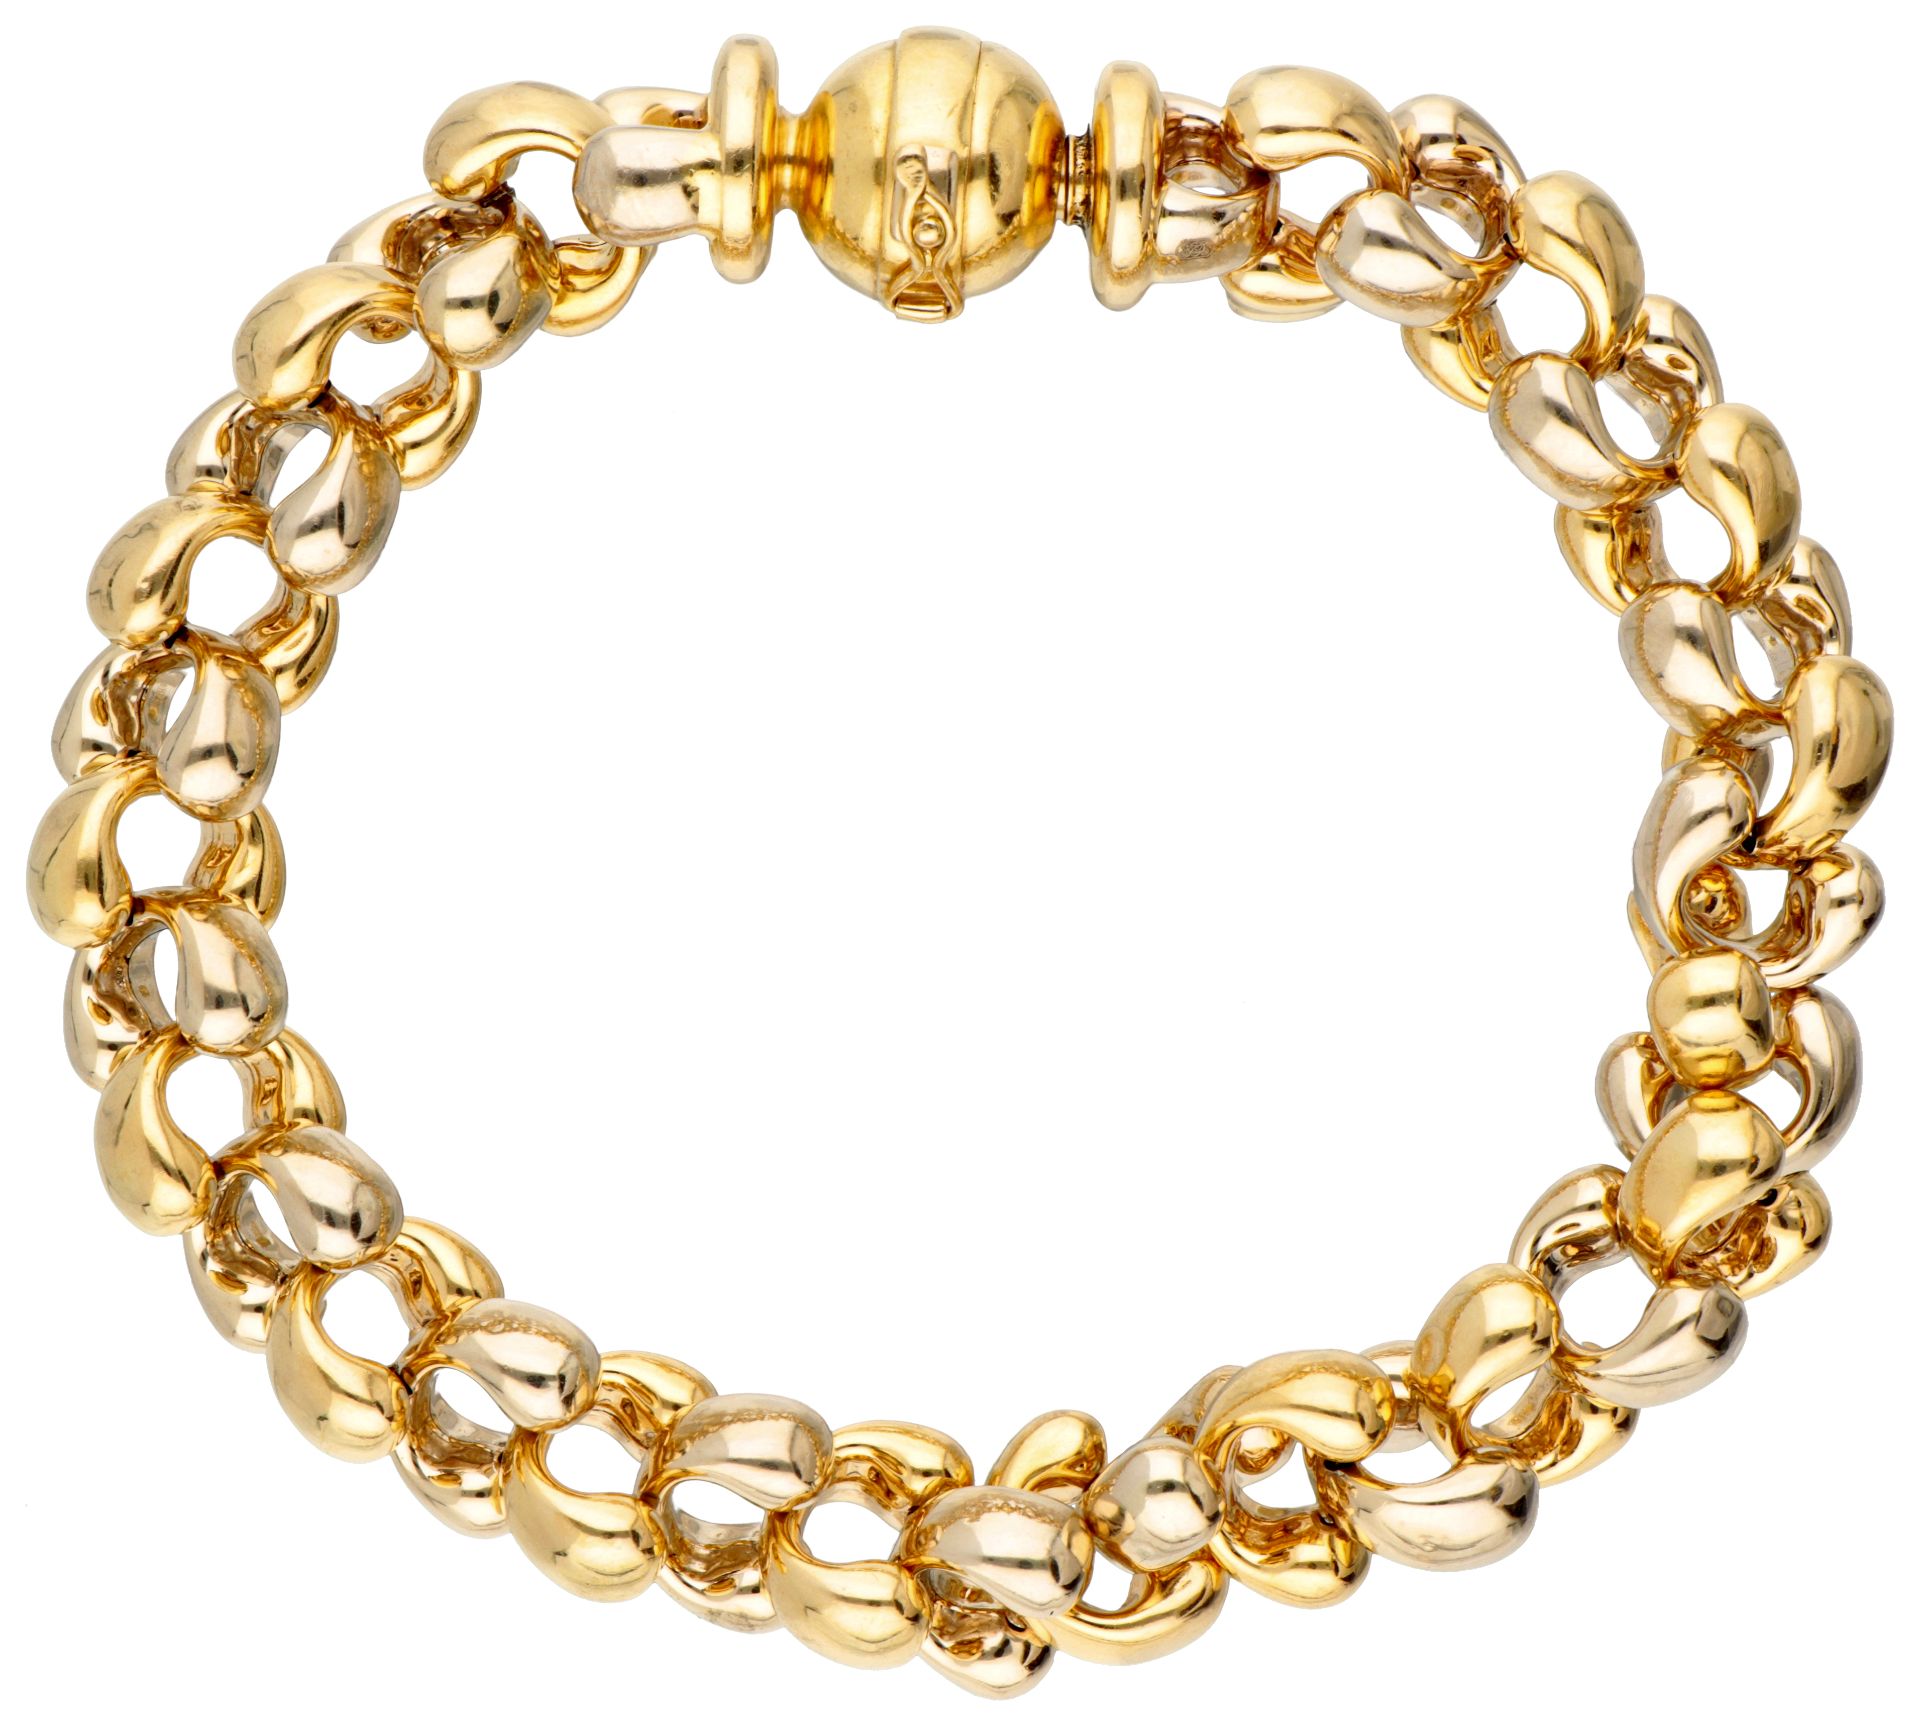 Cadaro 18K bicolour gold link bracelet.